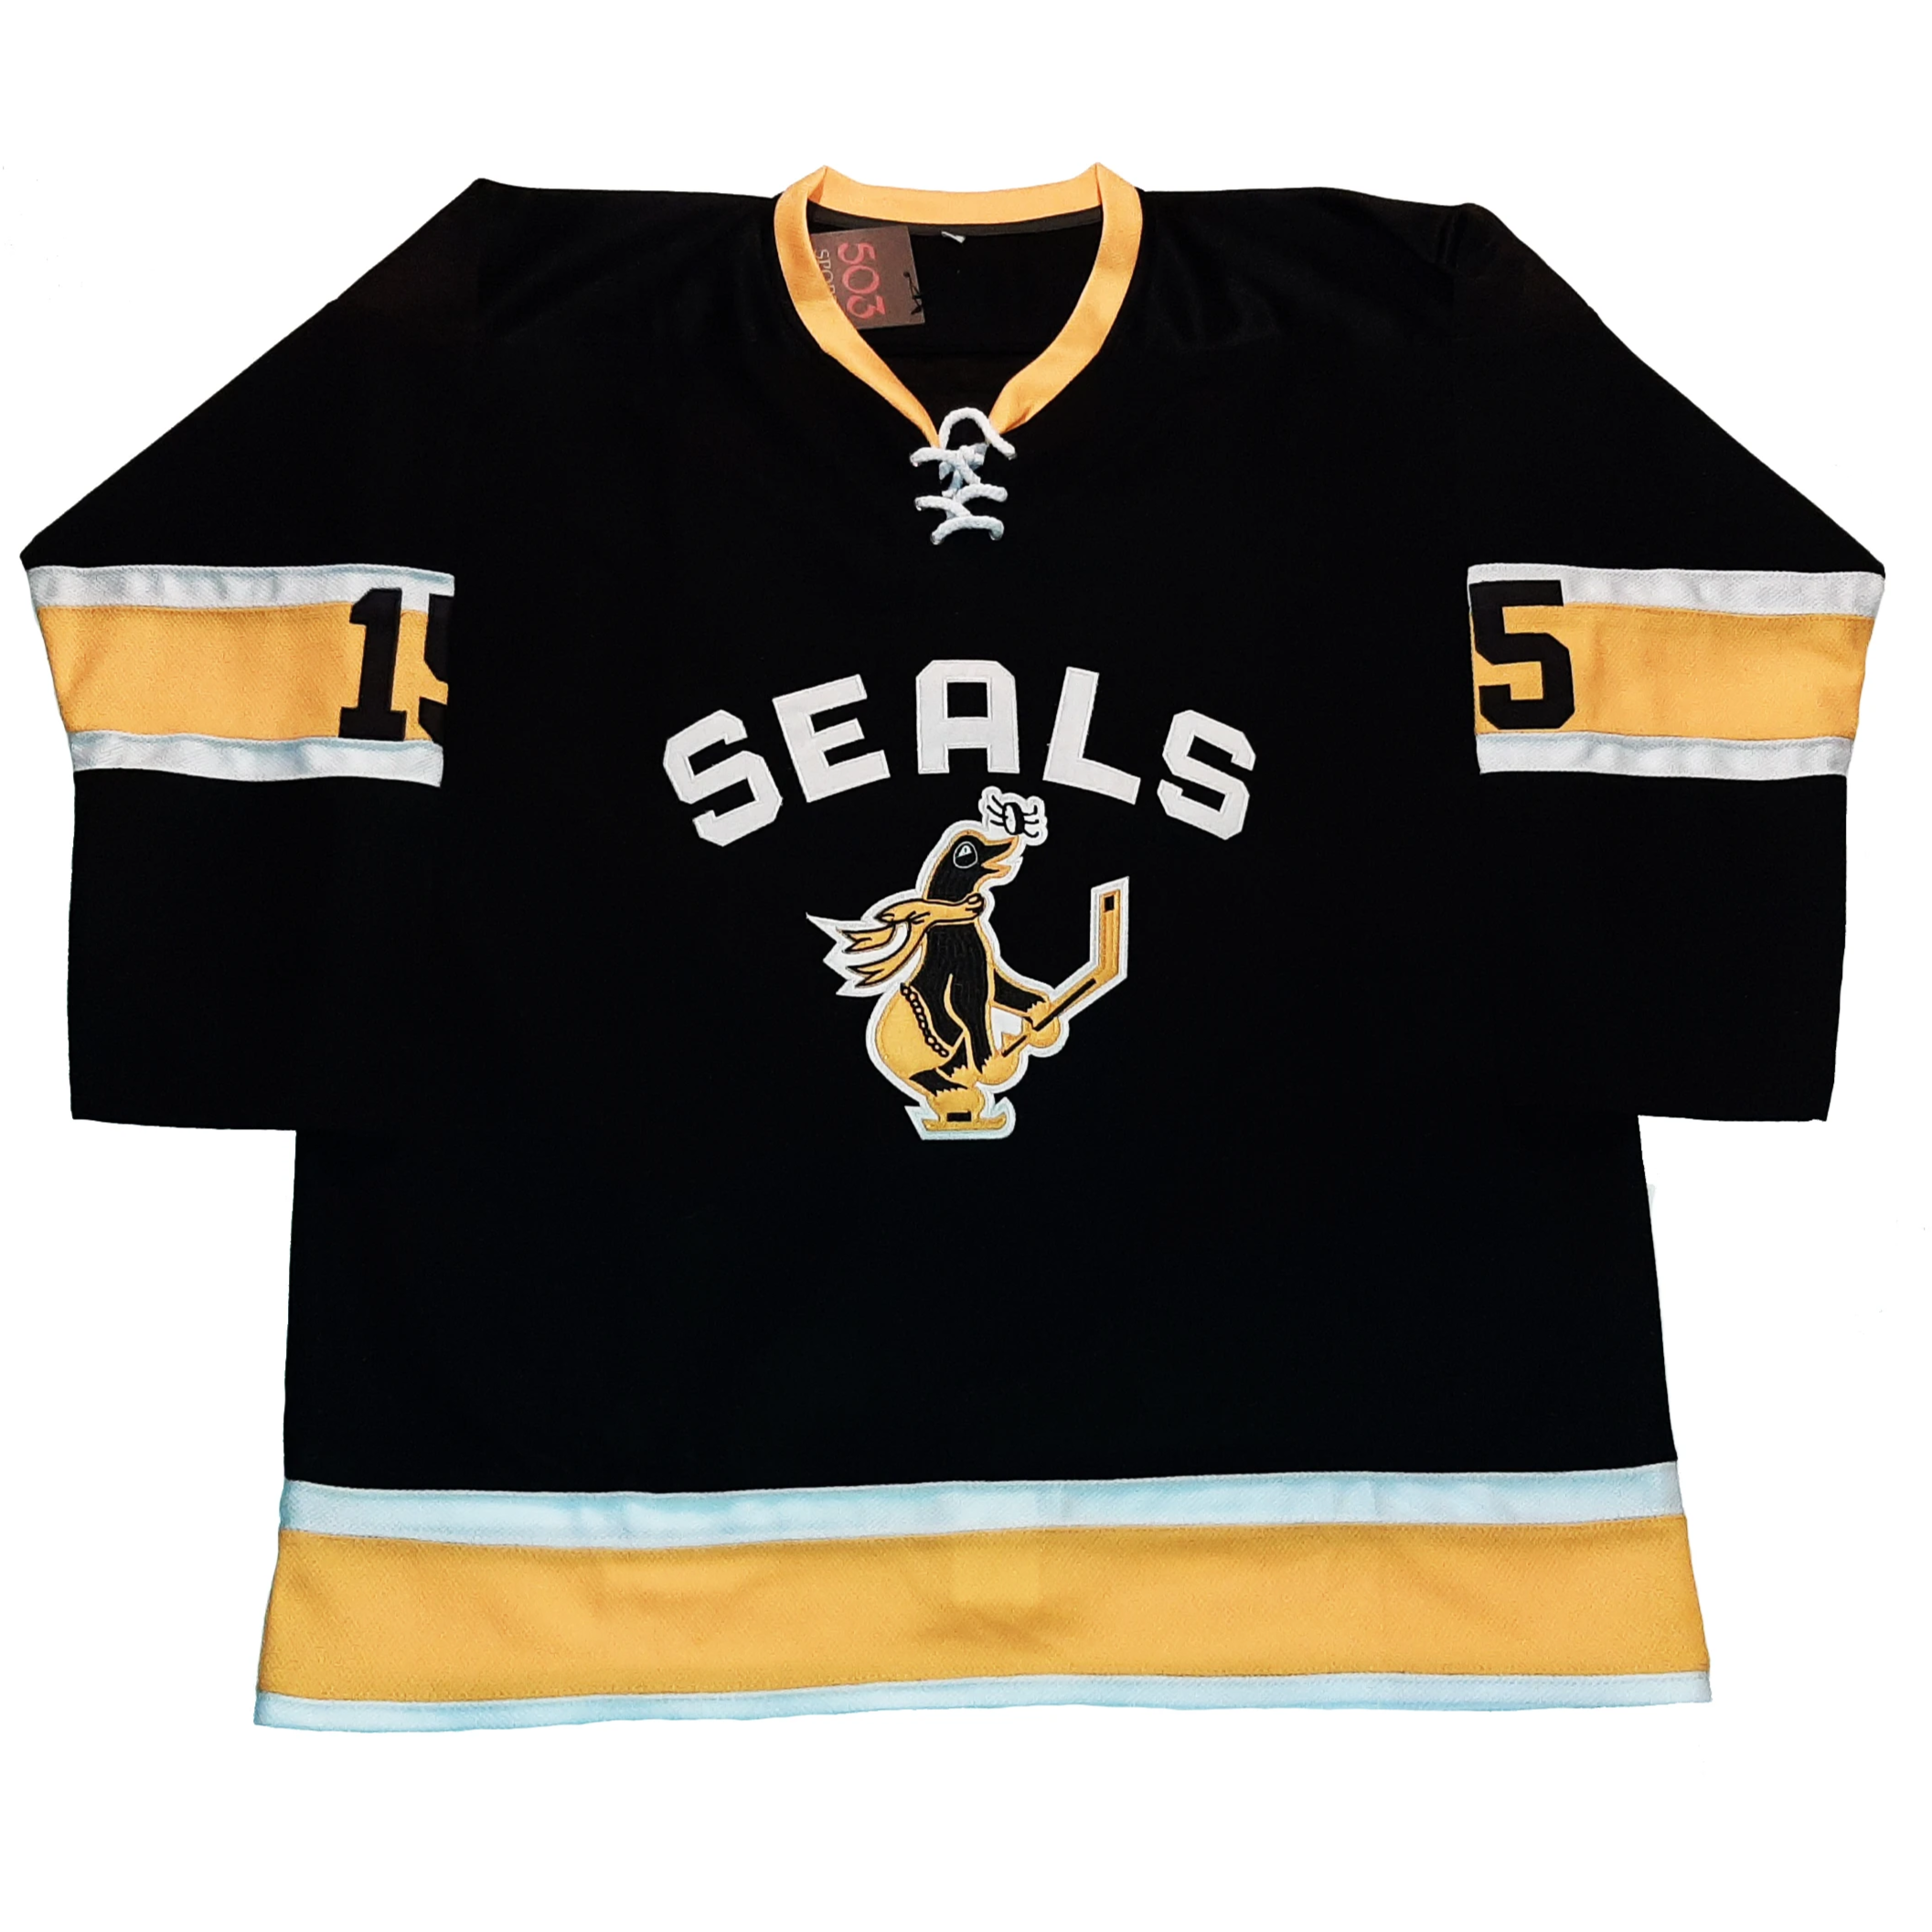 Stadium Adult Hockey Jersey - Black/Gold/Gray